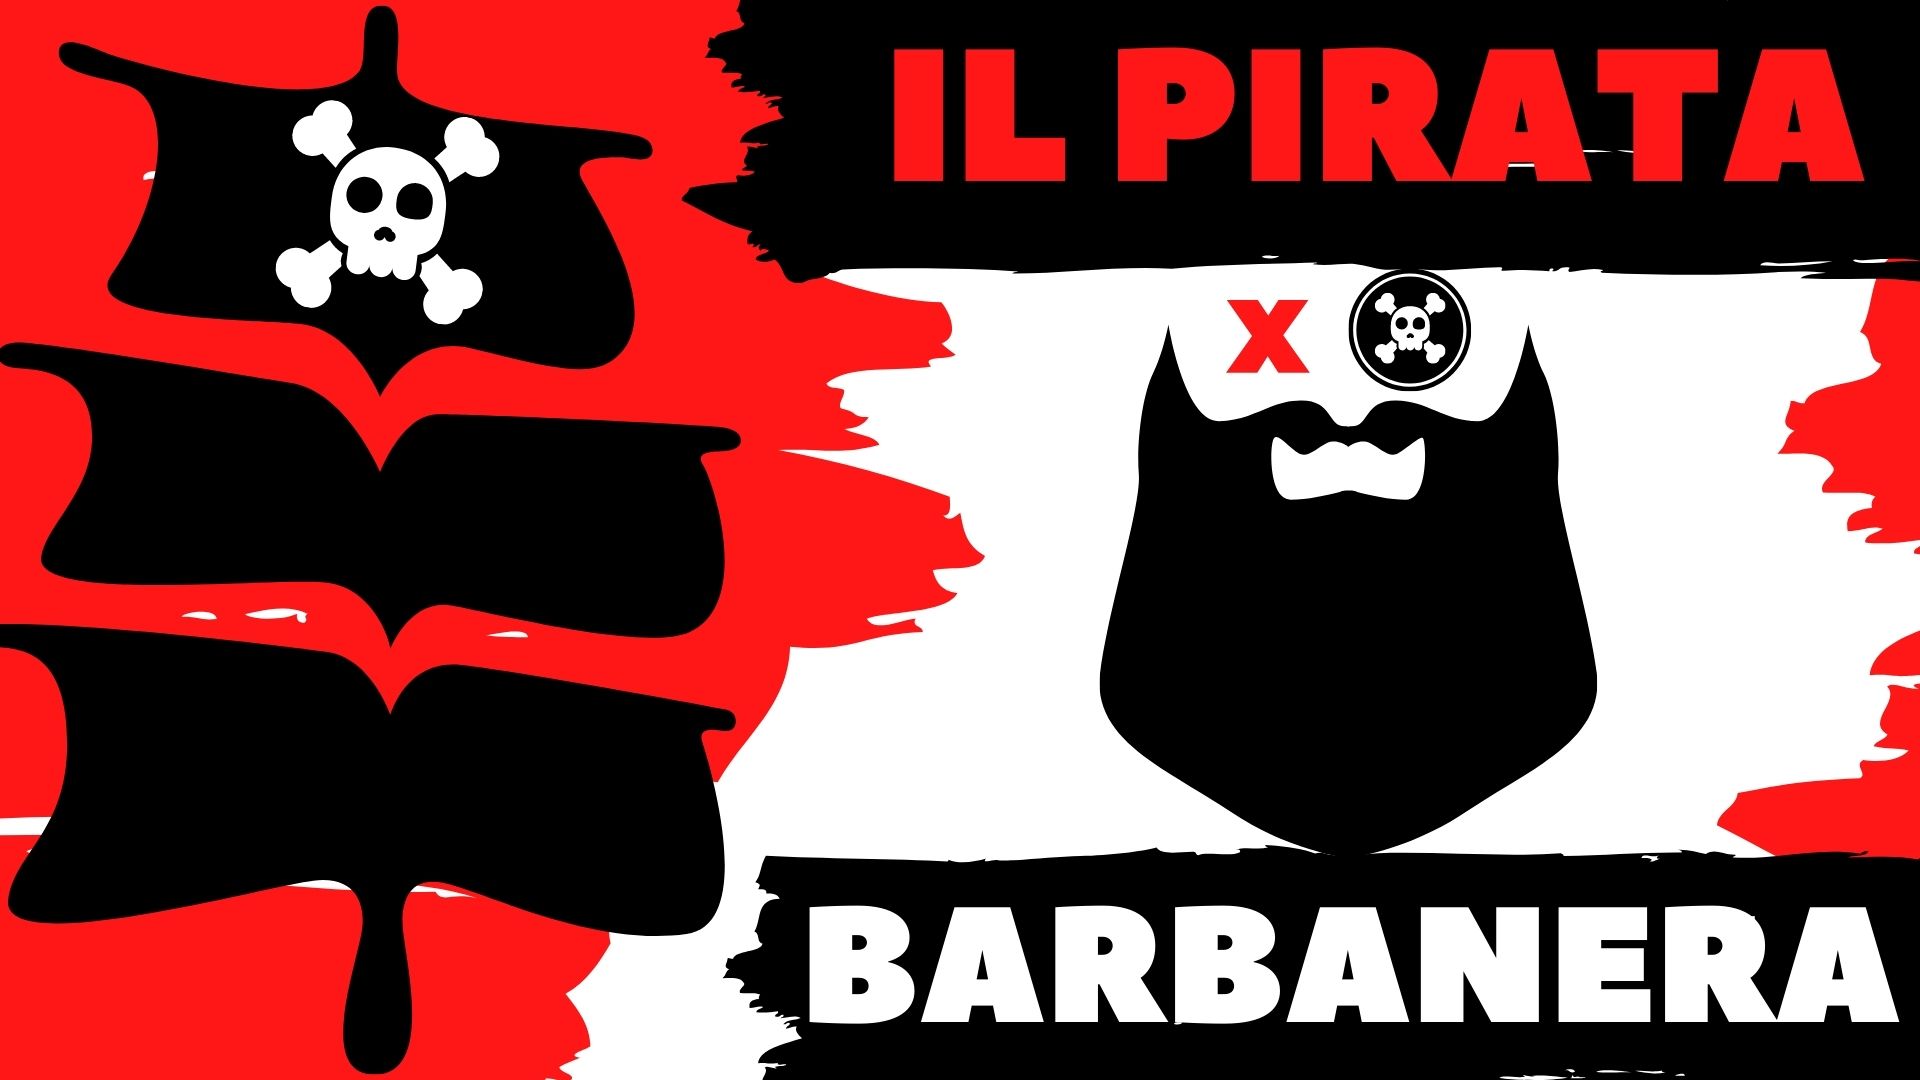 Pirata Barbanera